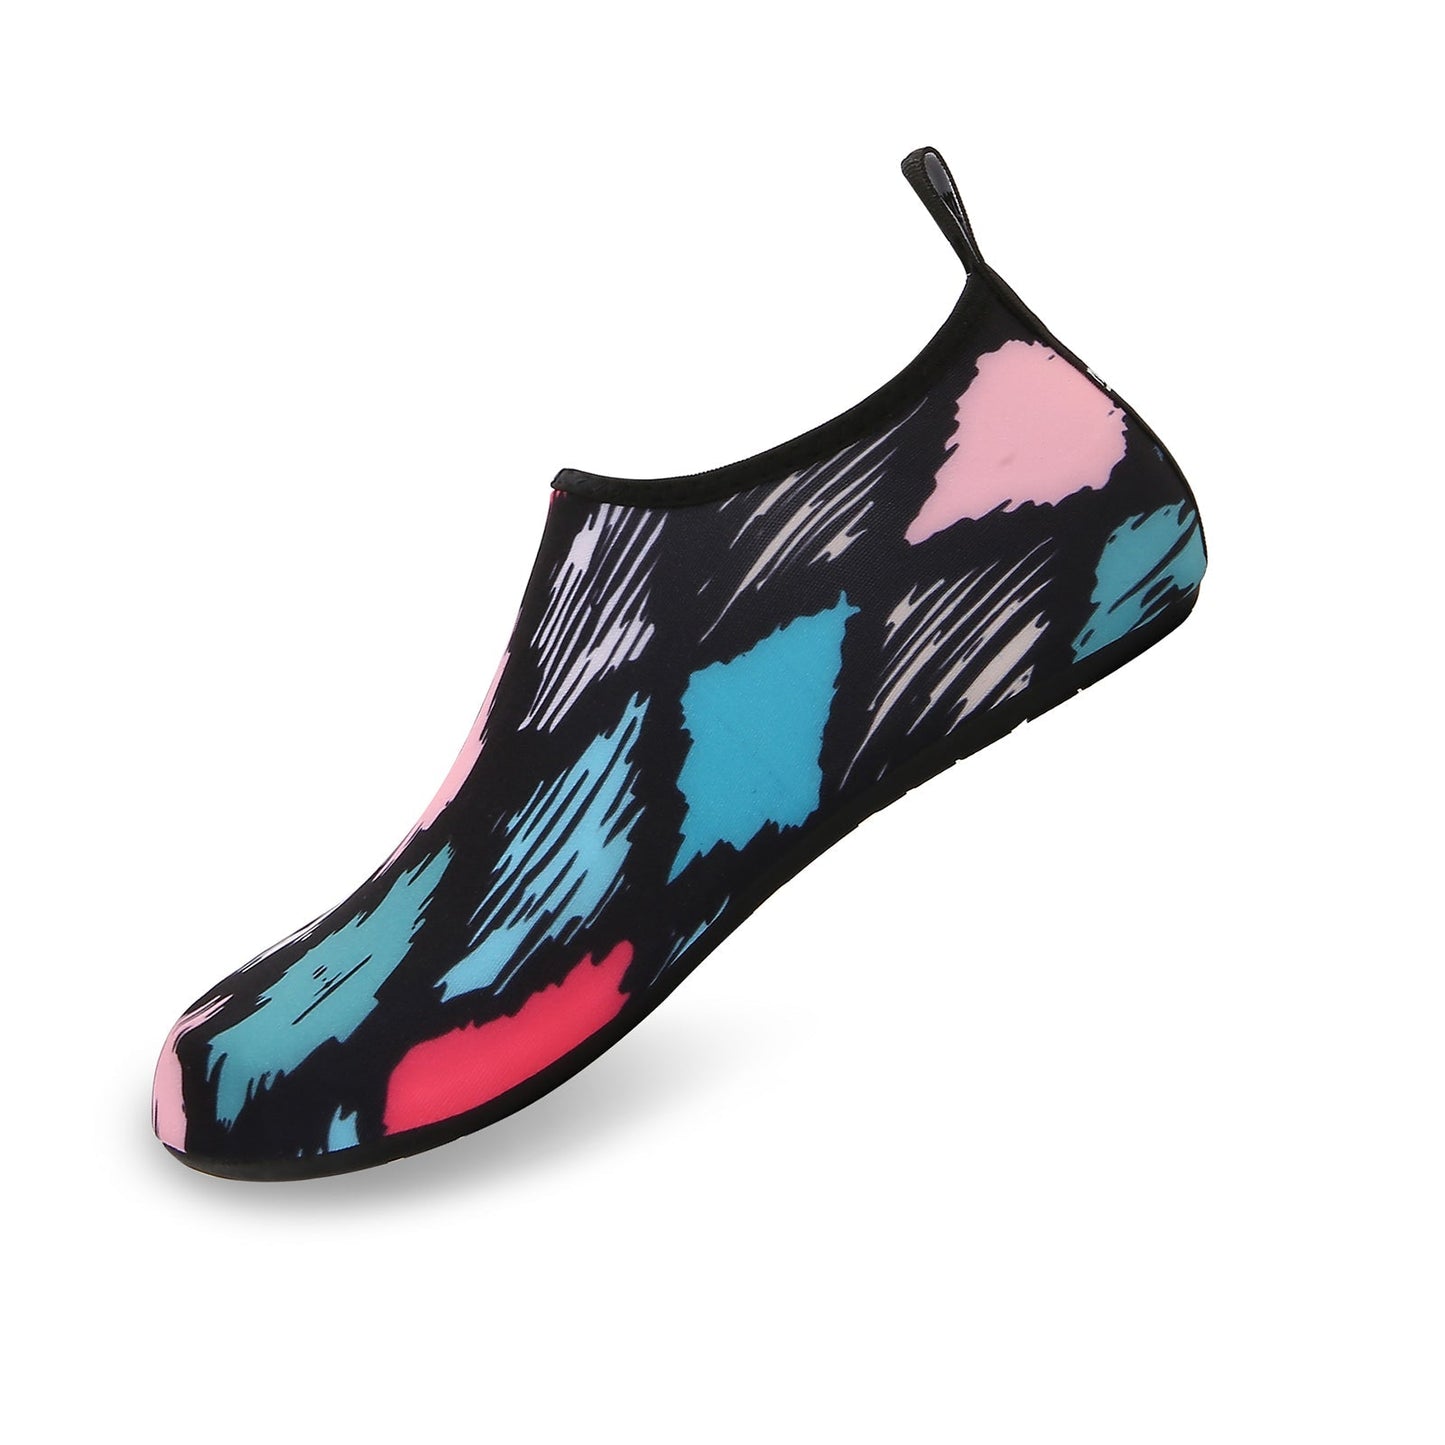 Men and Women a Slip On Barefoot Quick-Dry Beach Aqua Yoga Water Shoes (Diamond/Multicolor)